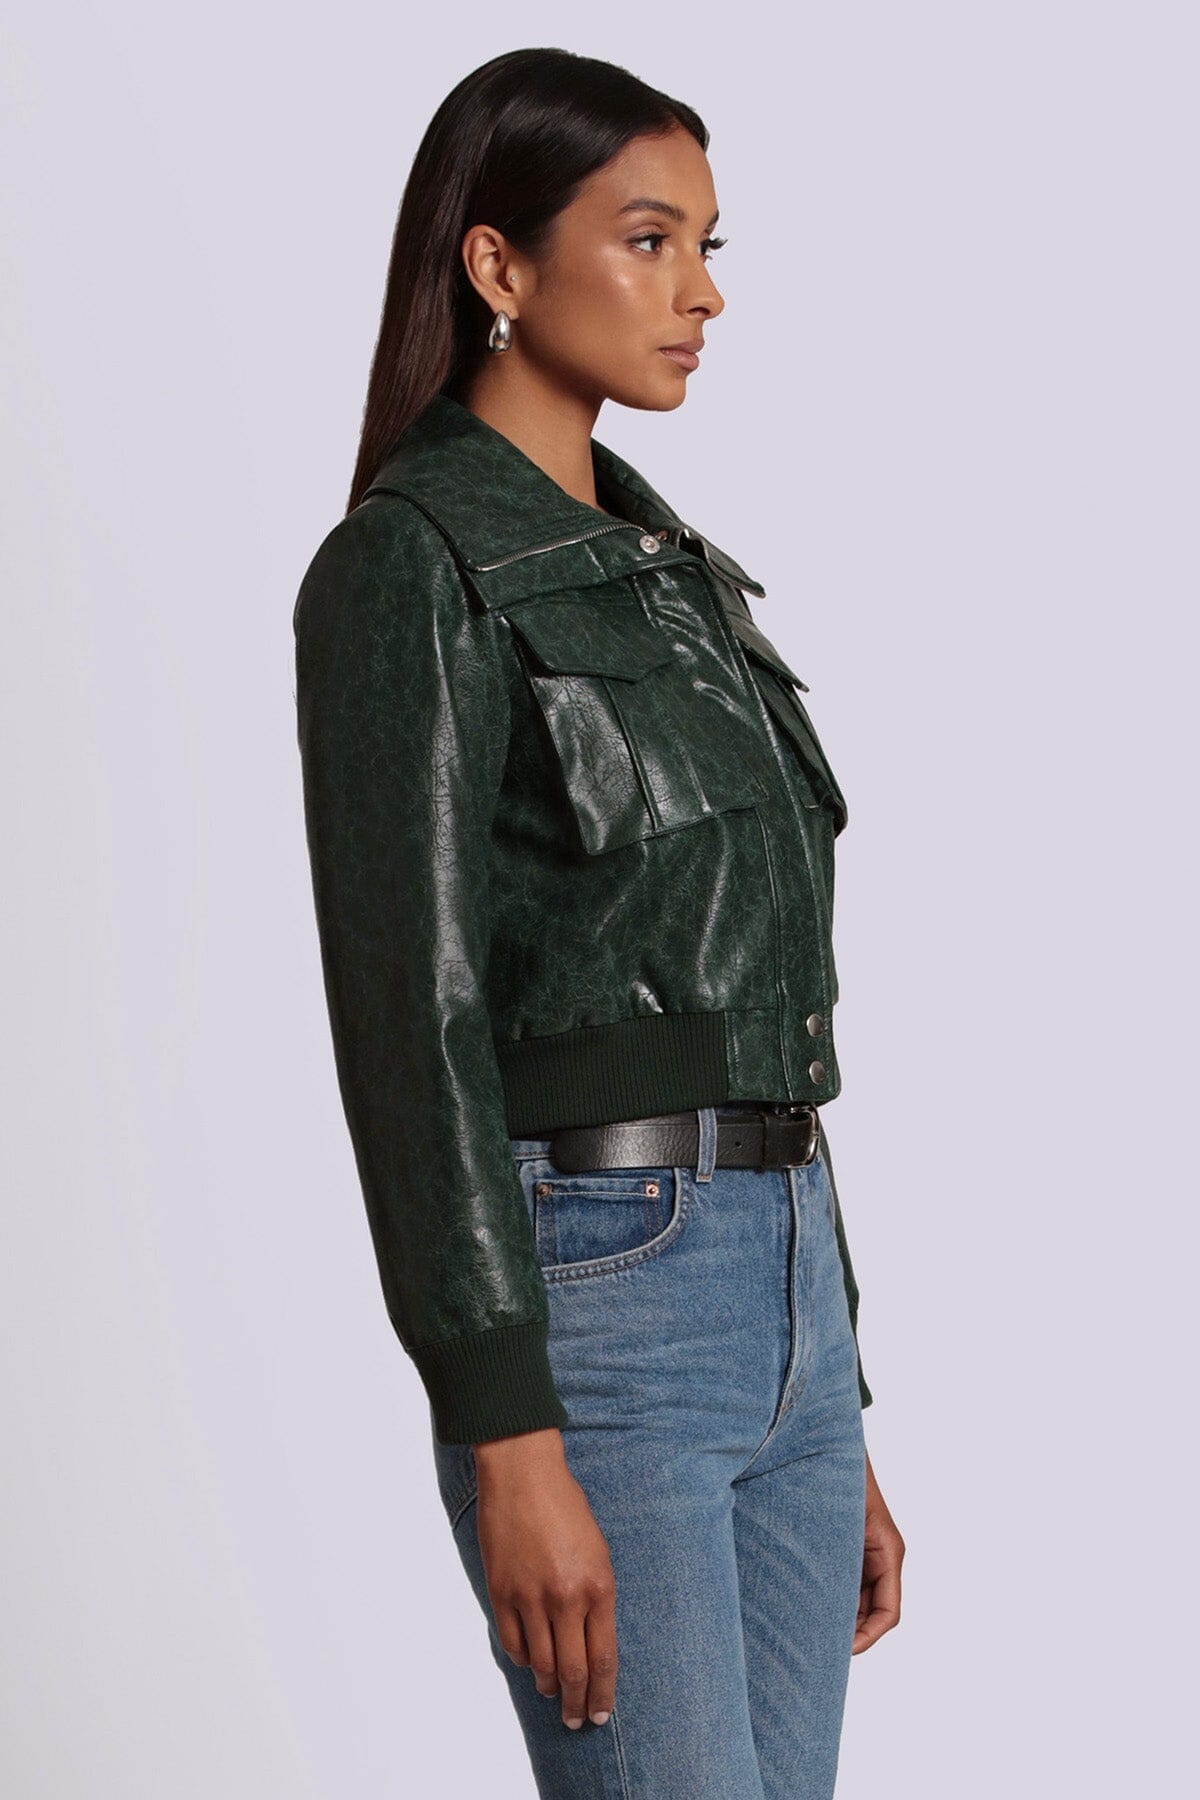 Emerald green faux ever leather cropped aviator jacket coat - figure flattering cute work jackets for women